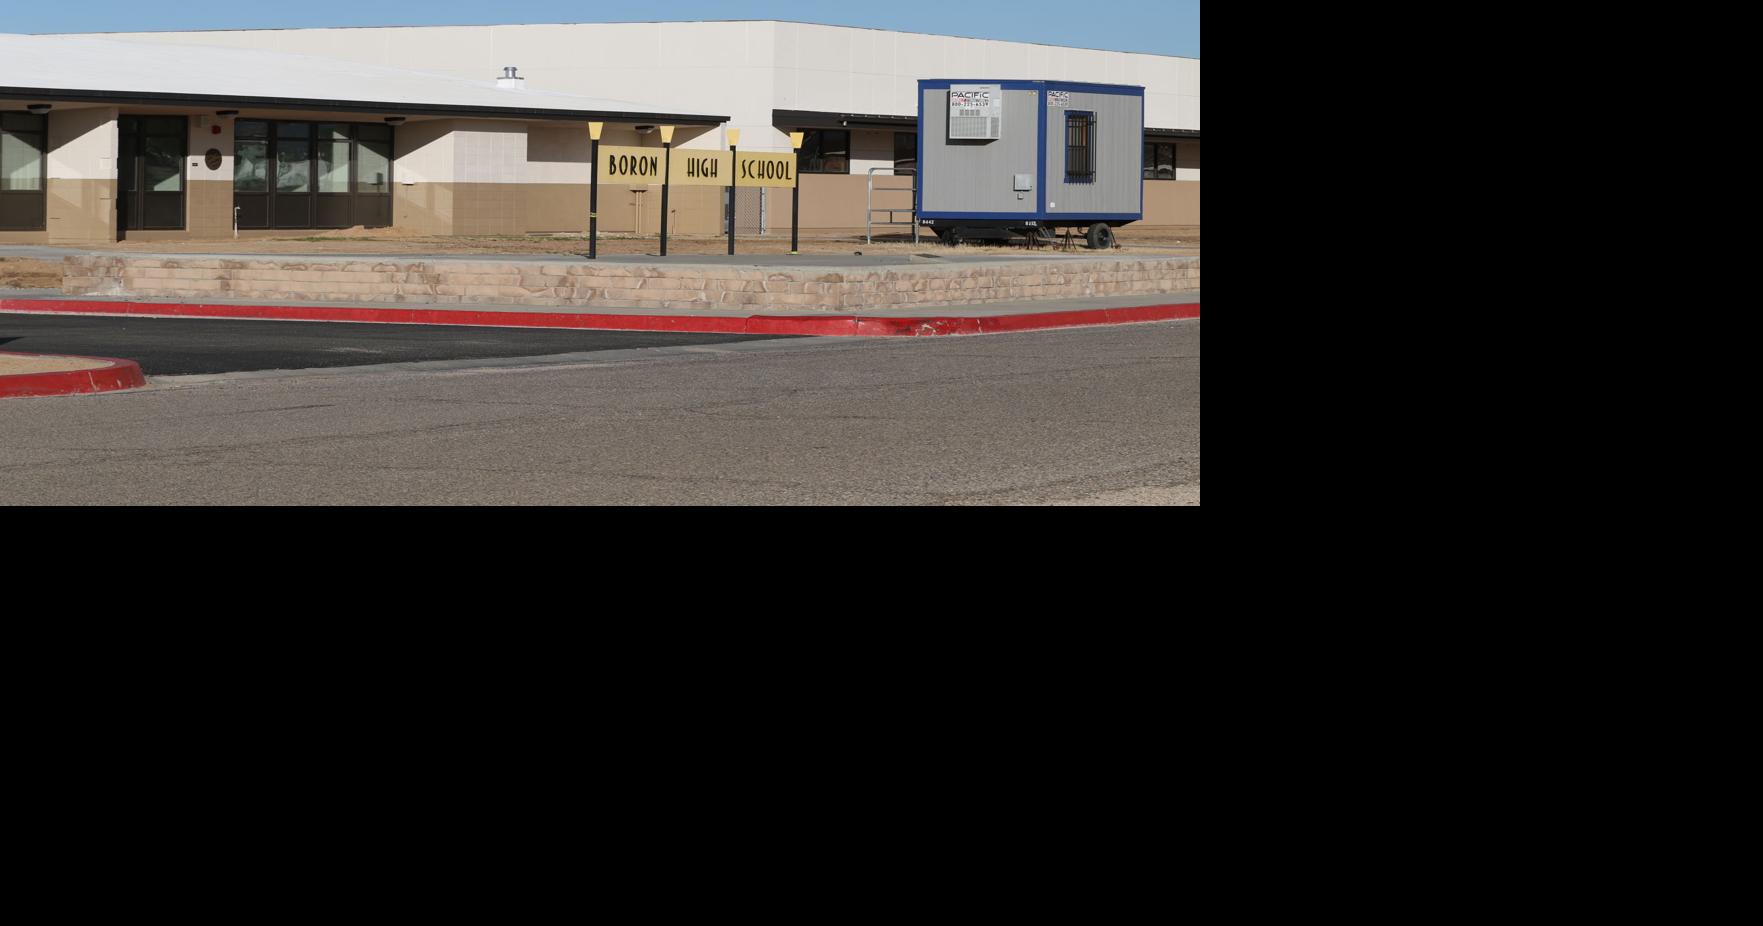 Construction at Boron High School nears finish line | News | desertnews.com